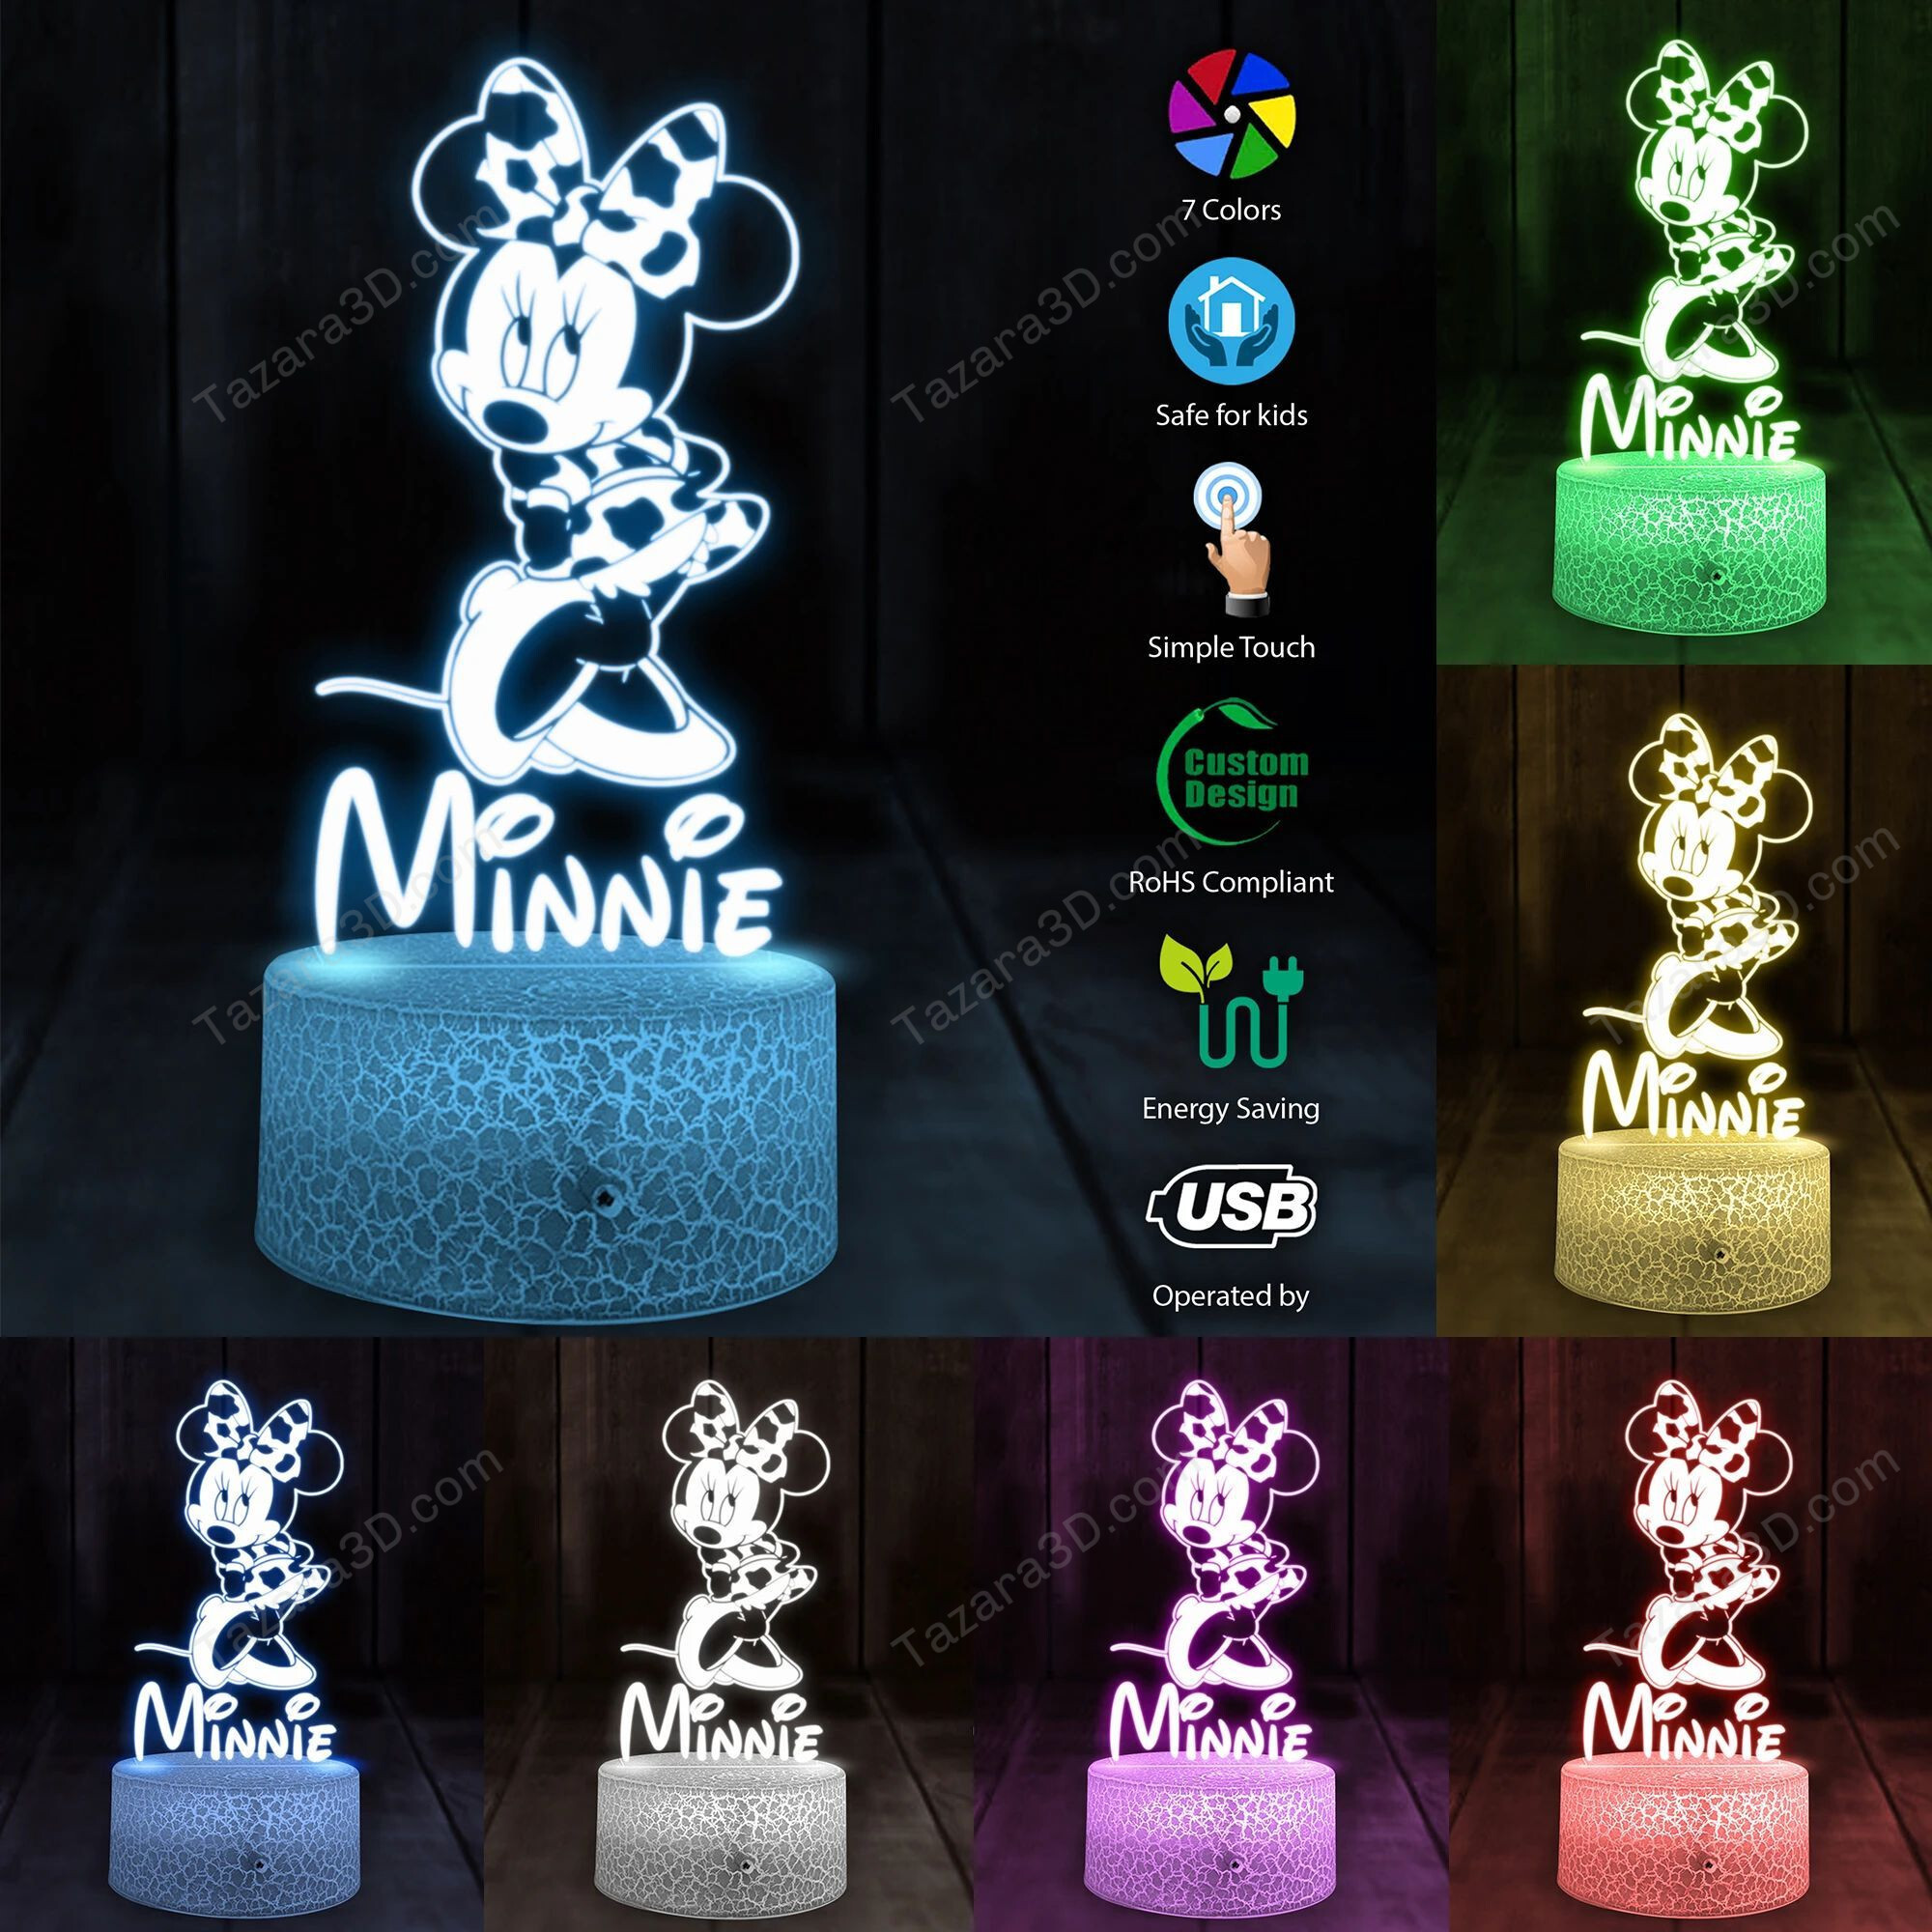 Minnie Mouse 3D Led Light